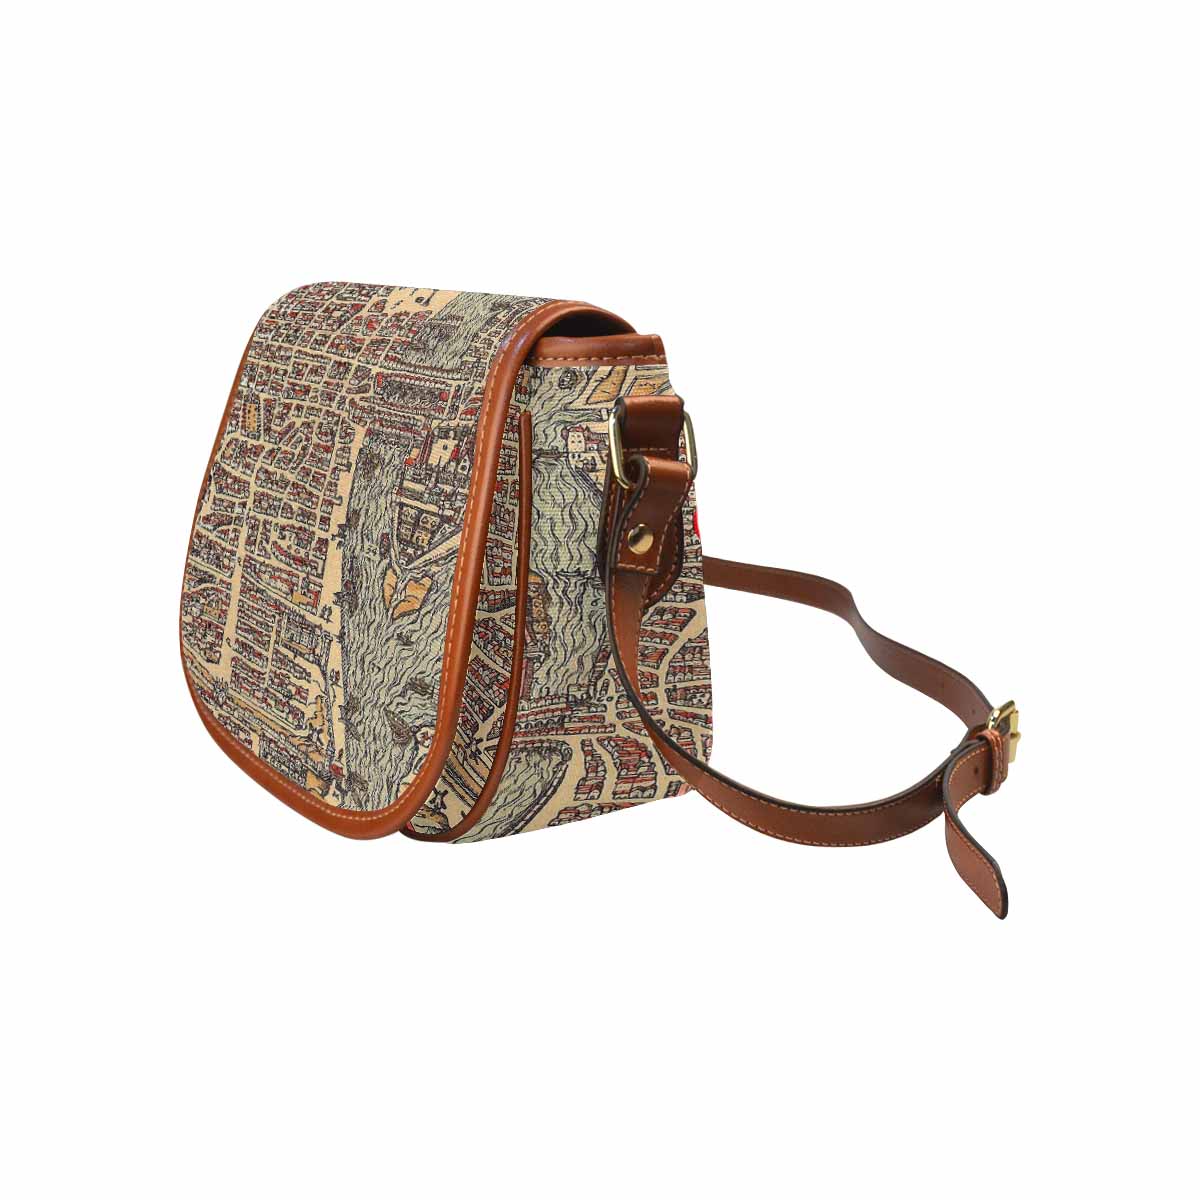 Antique Map design Handbag, saddle bag, Design 49